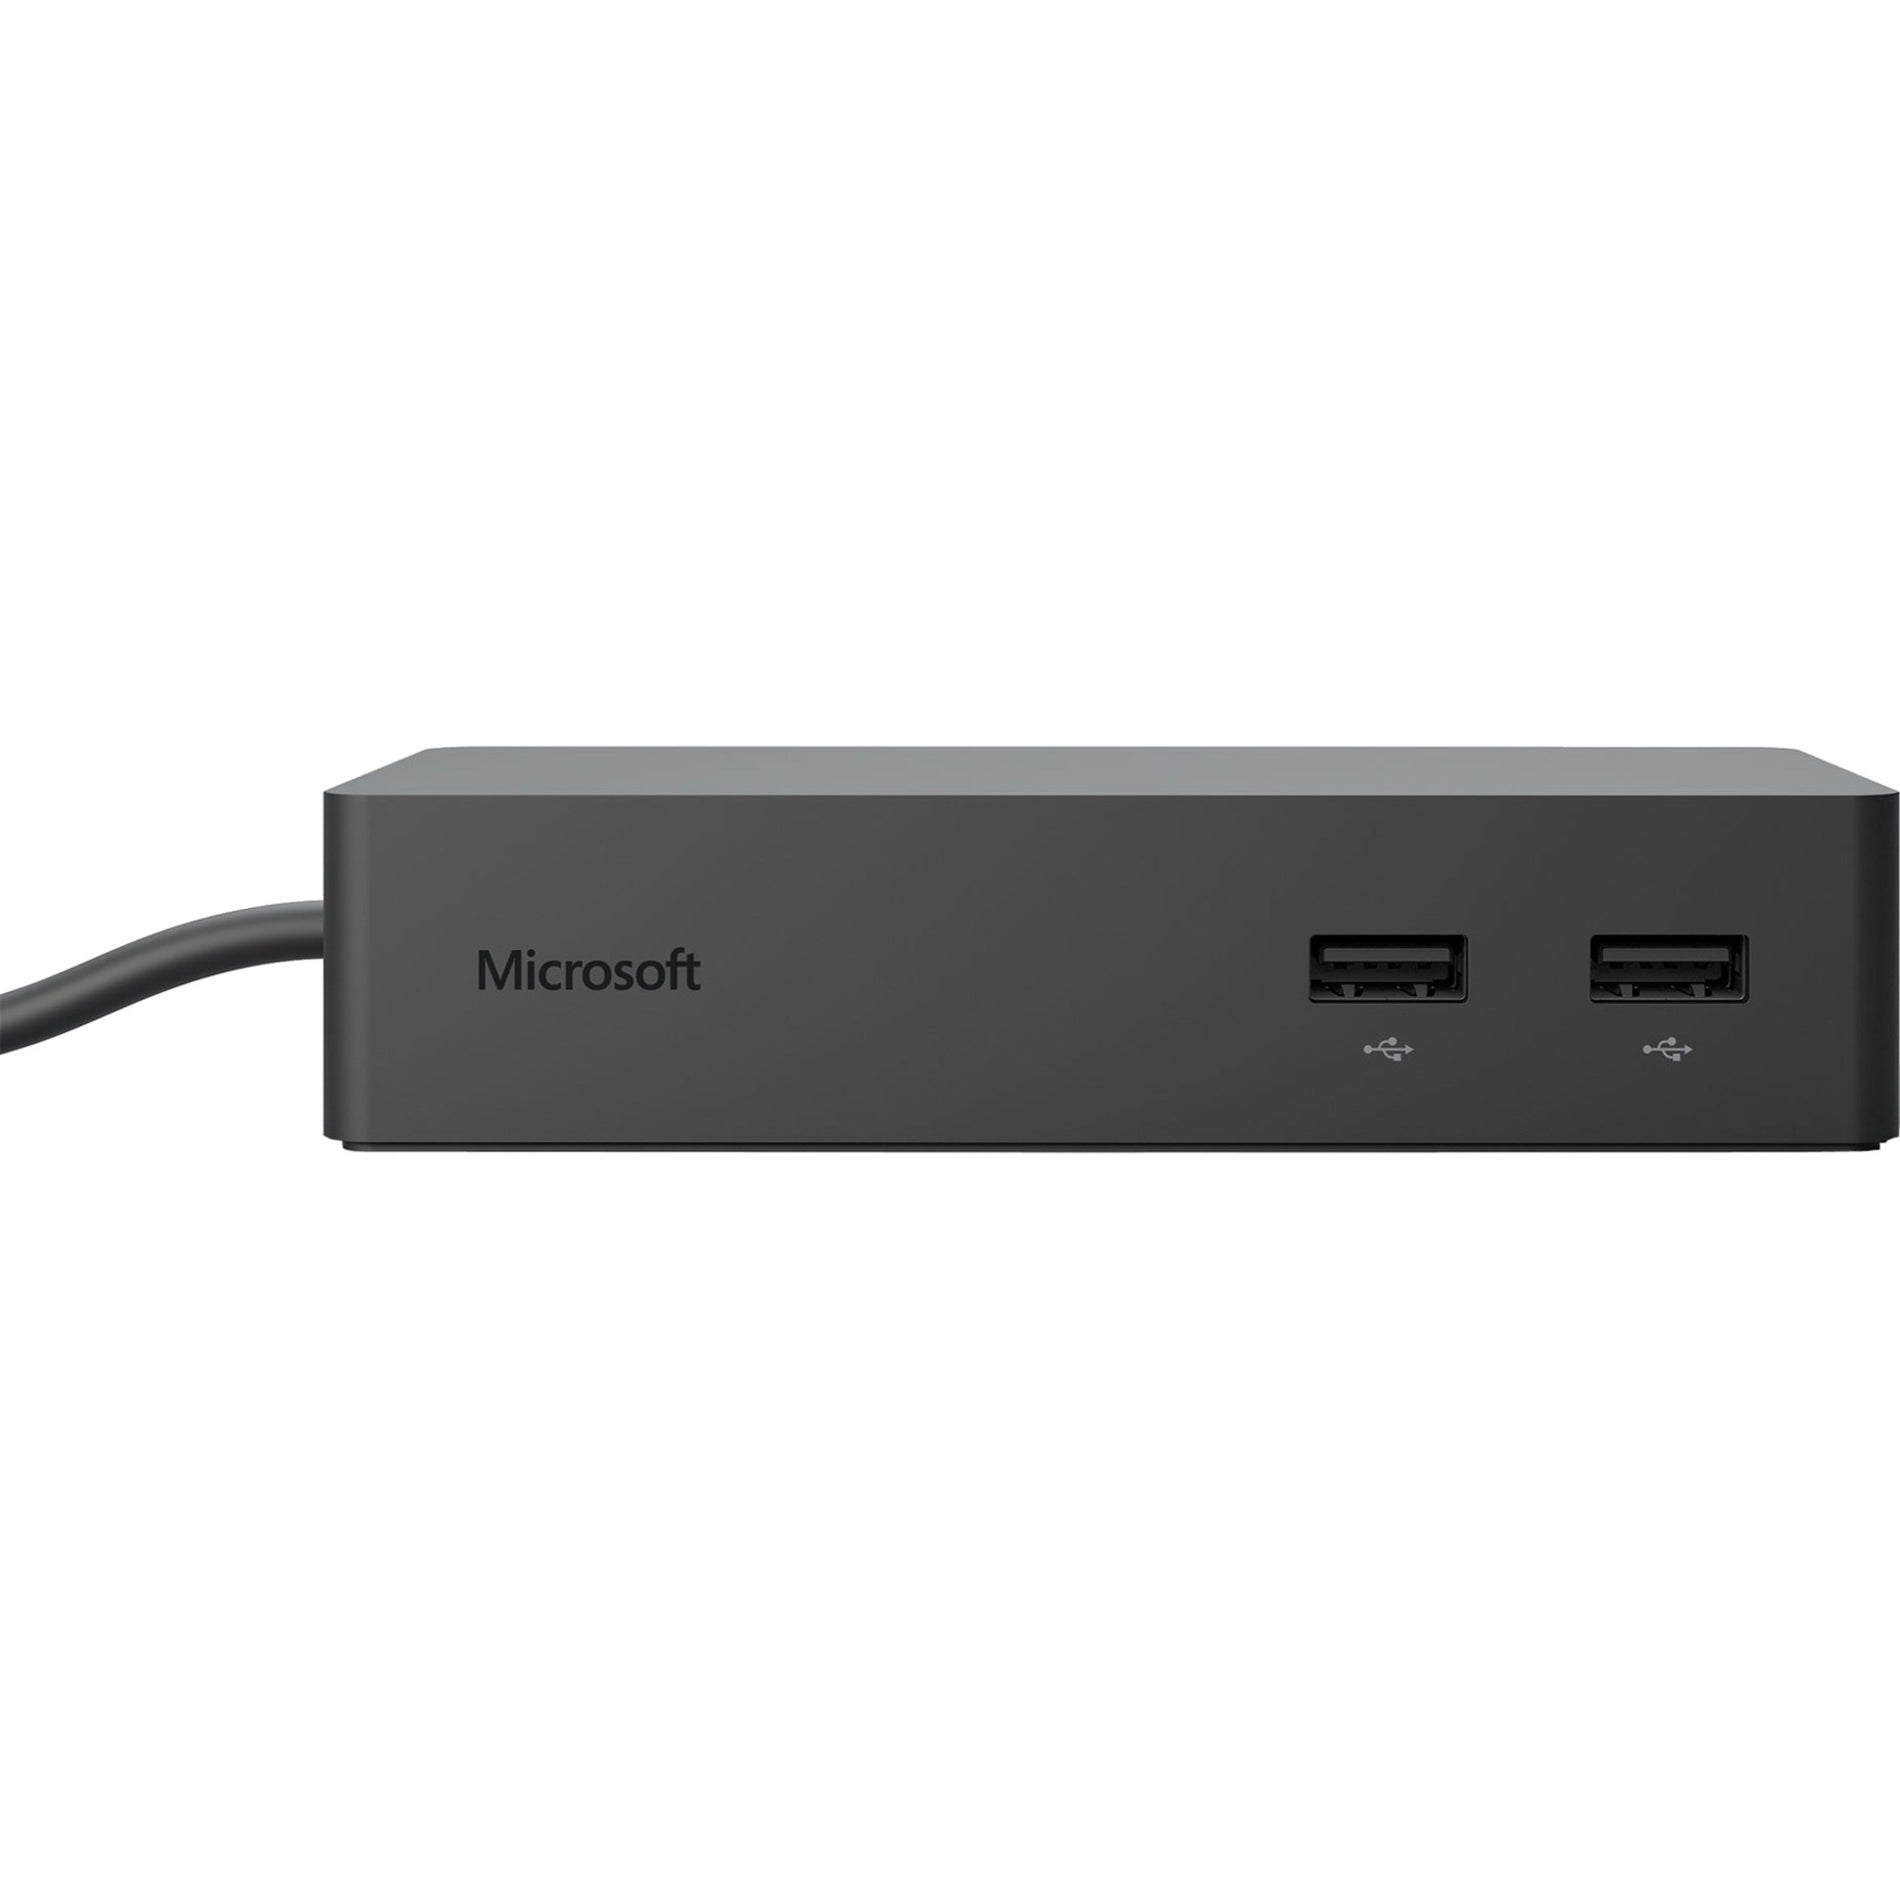 Microsoft PD9-00003 Surface Dock, USB 3.0 Docking Station with 4 USB 3.0 Ports